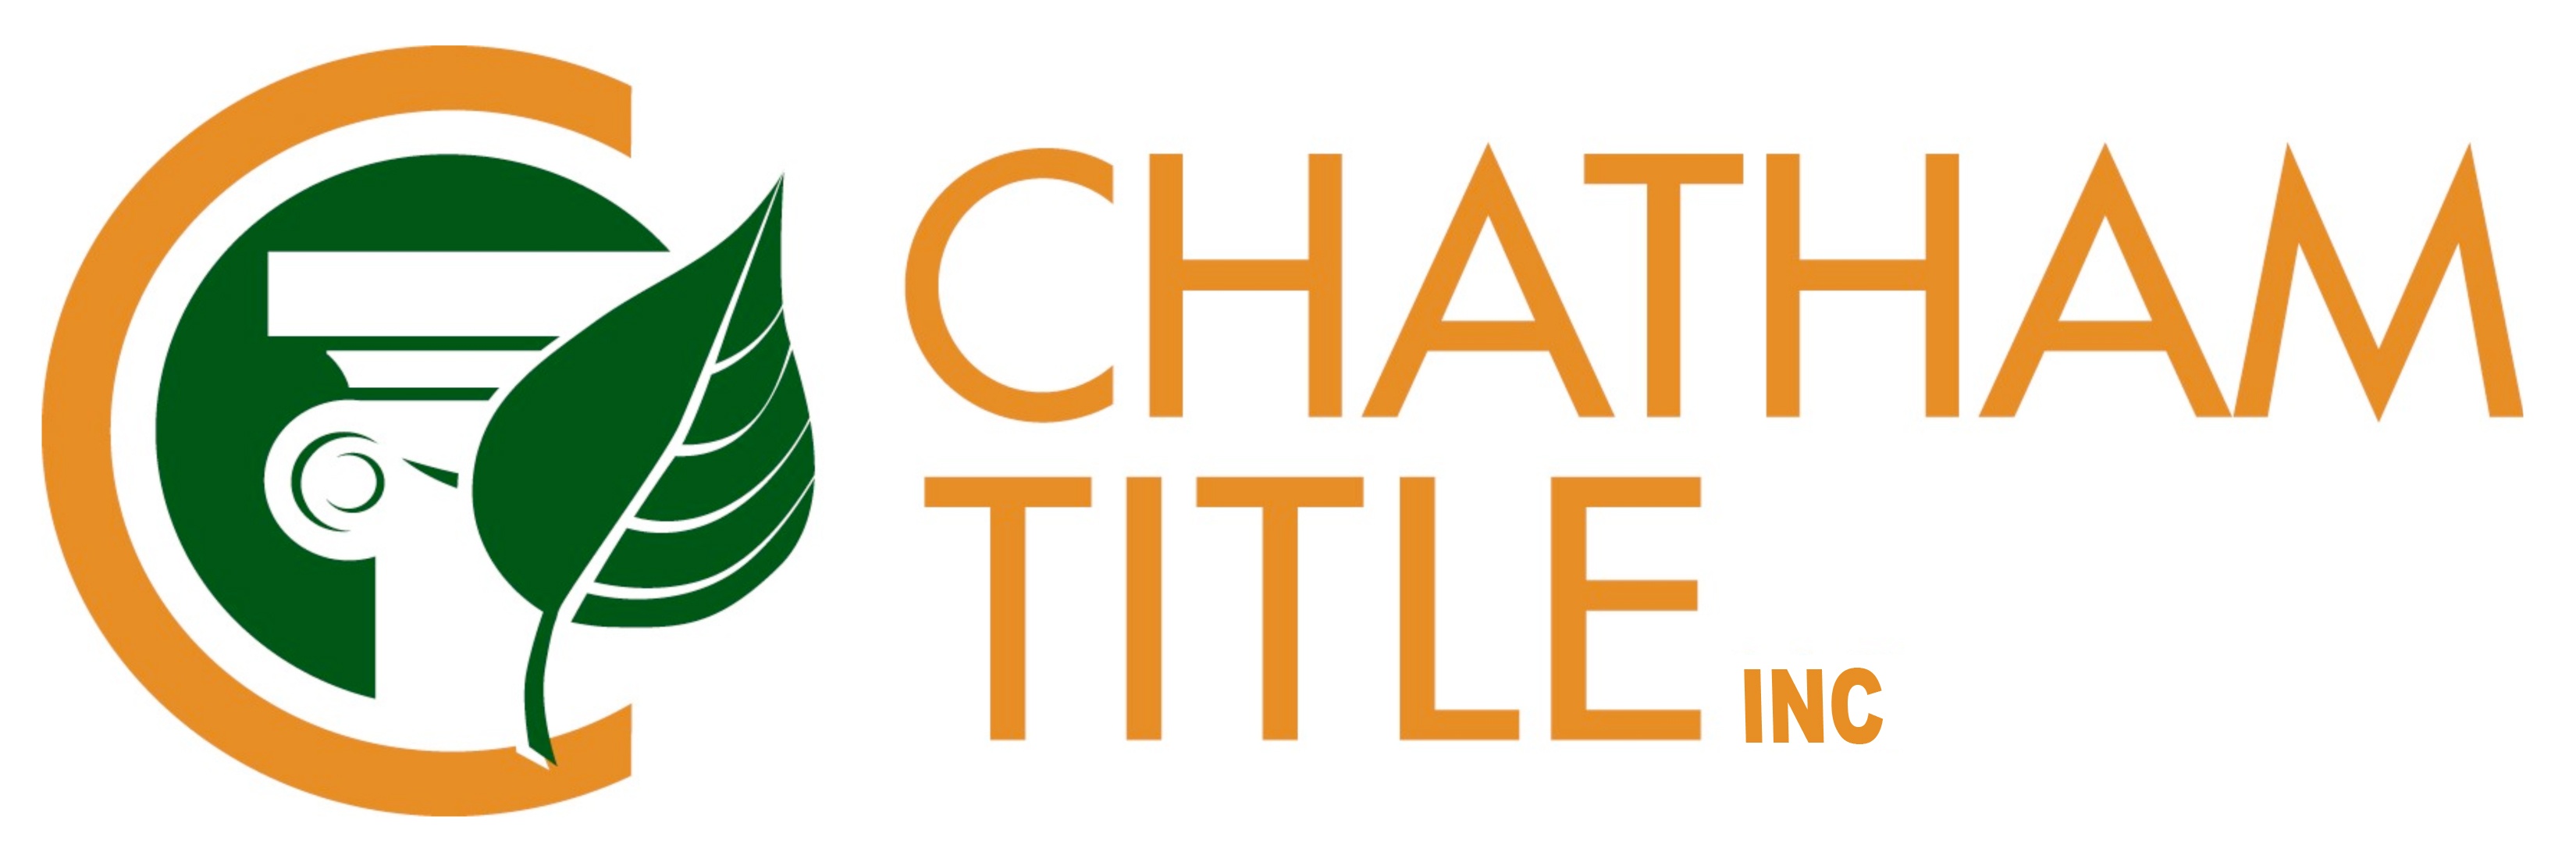 Settlement Directory - Chatham Title, Inc.